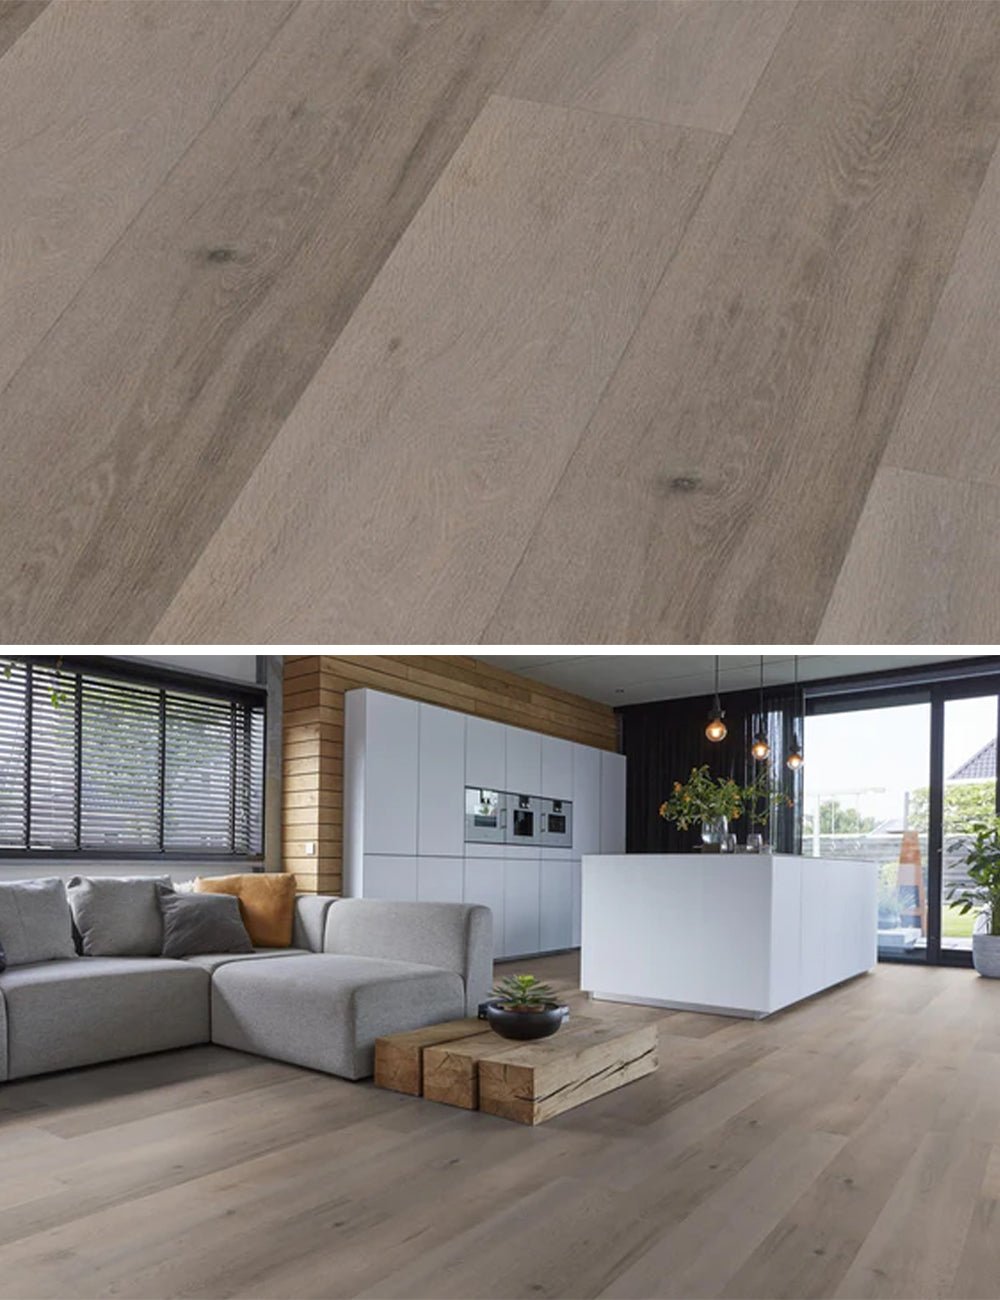 Floorlife Stratifié Woodlook Manhatten Grey Oak 8605 - Solza.fr